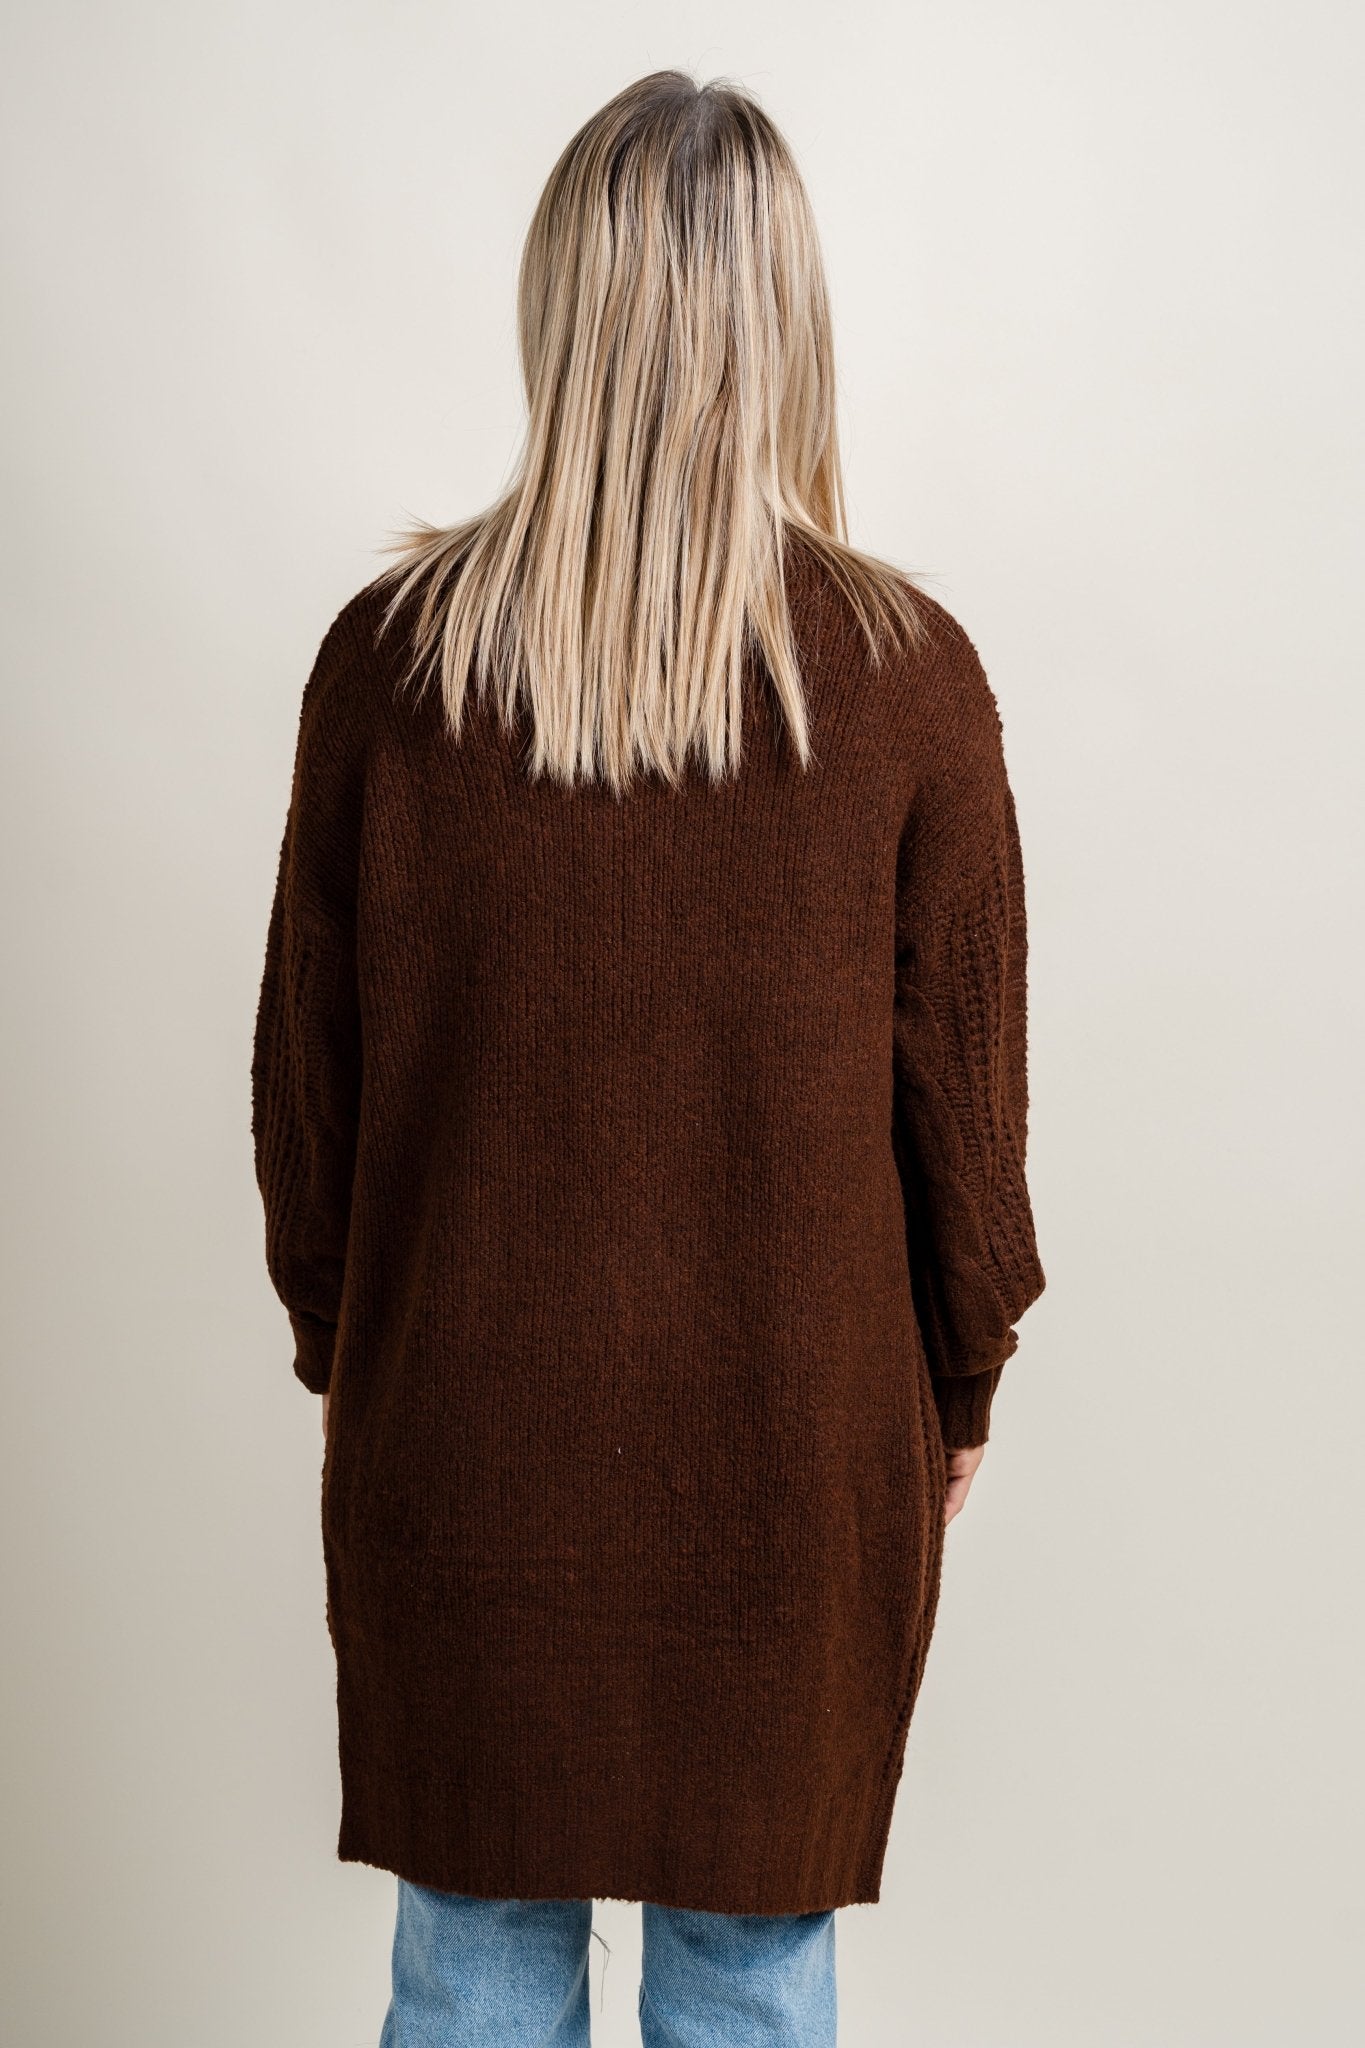 Knit sweater cardigan brown